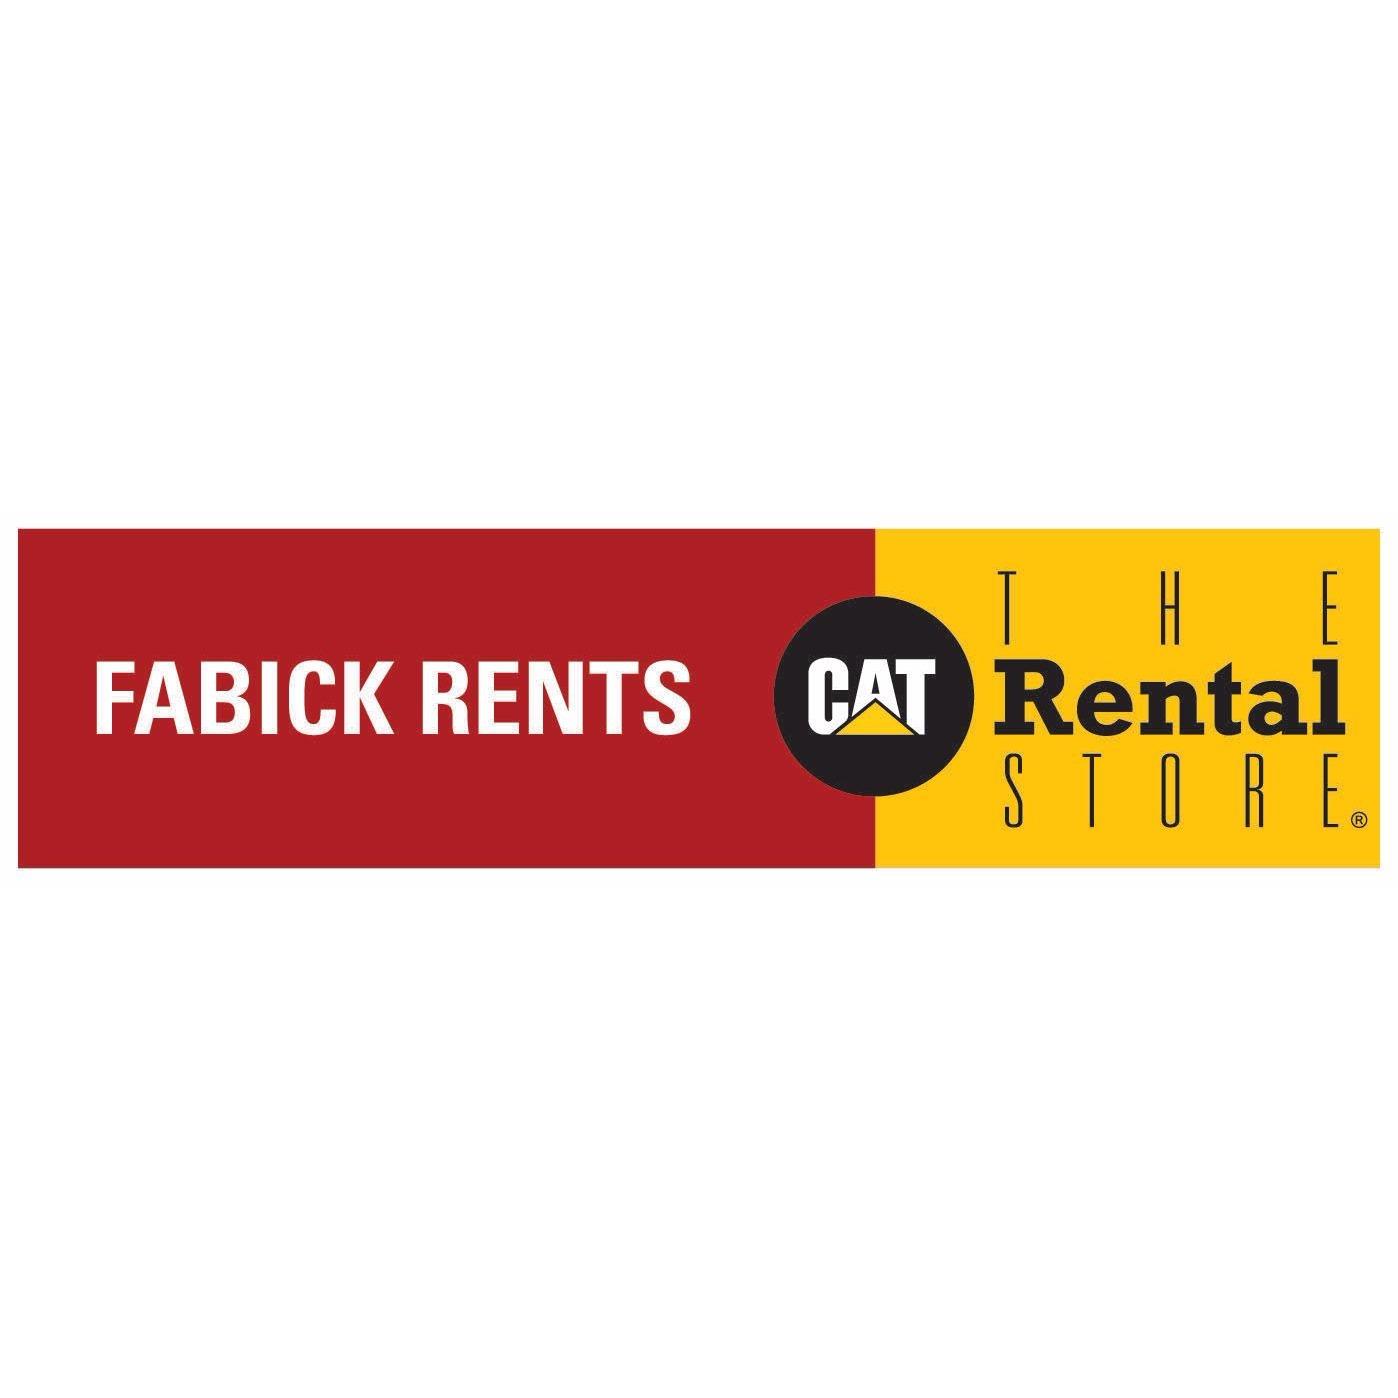 Fabick Rents in Fenton, MO (636) 3435...